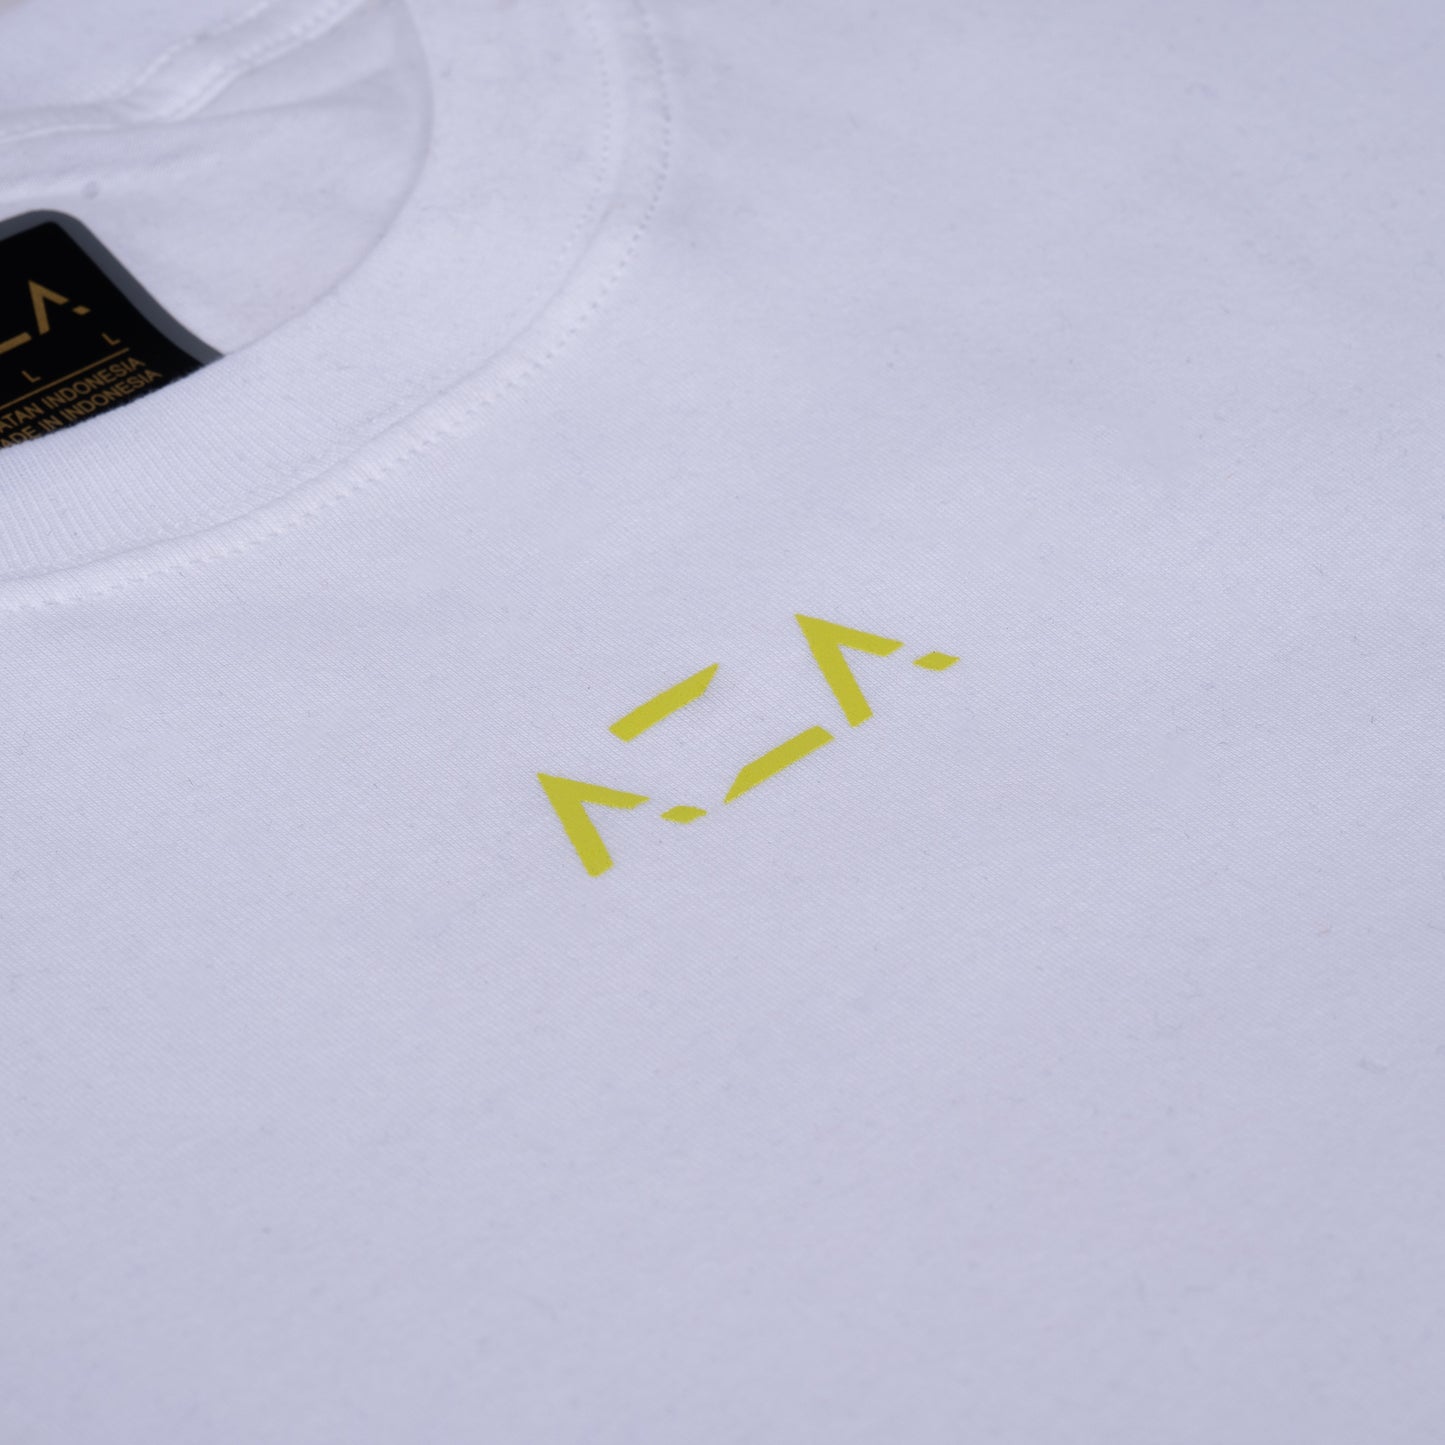 AZA T-Shirt Pro Basic Edition (Vol.2) - White / Neon Green